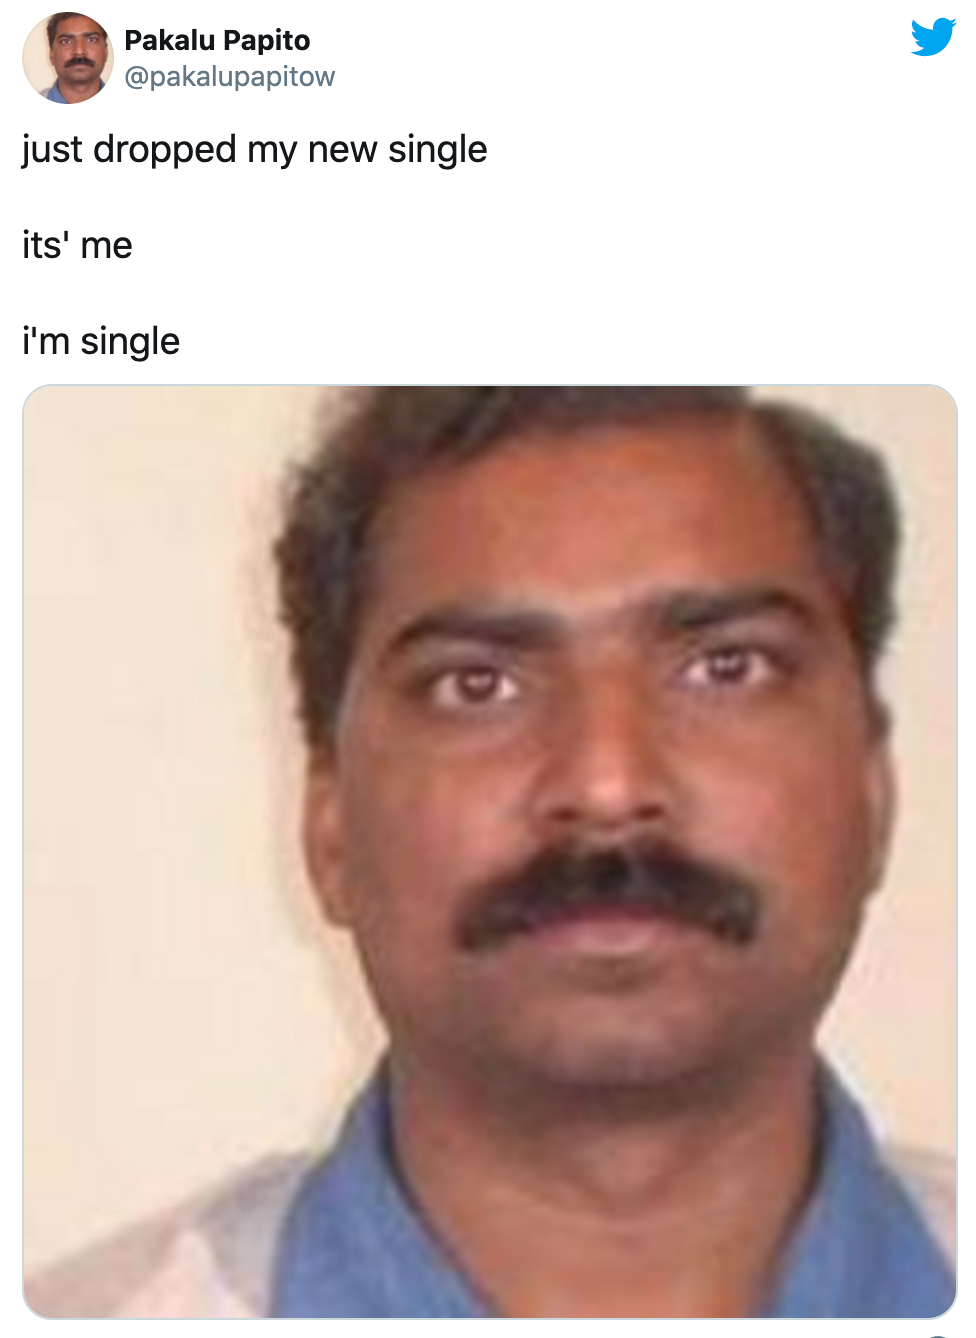 funny valentine's day memes -- Pakalu Papito just dropped my new single its' me i'm single